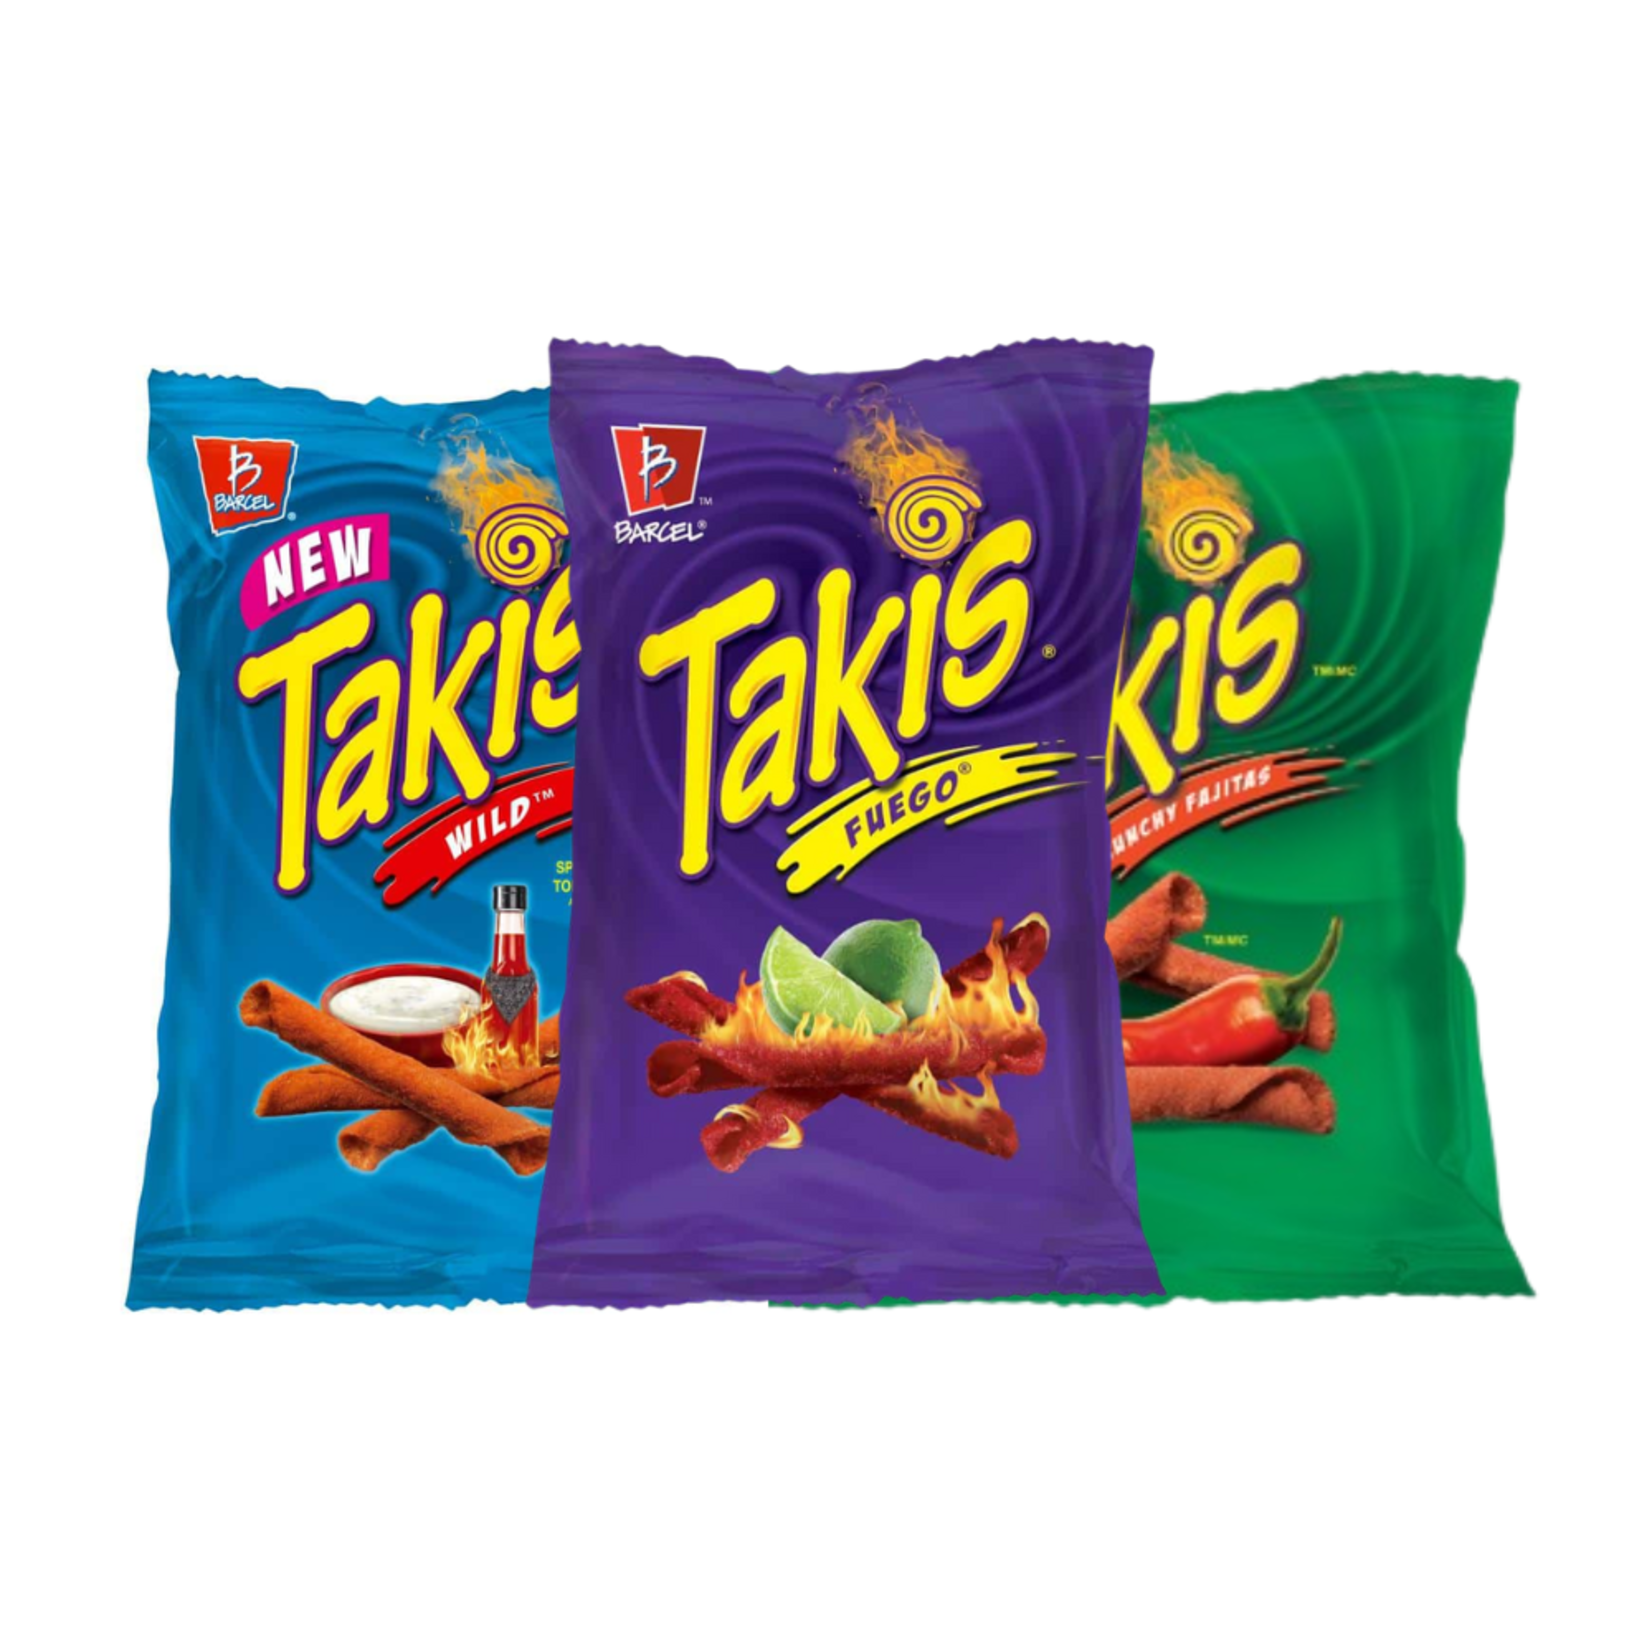 Barcel Takis Flavor Pack 24ct